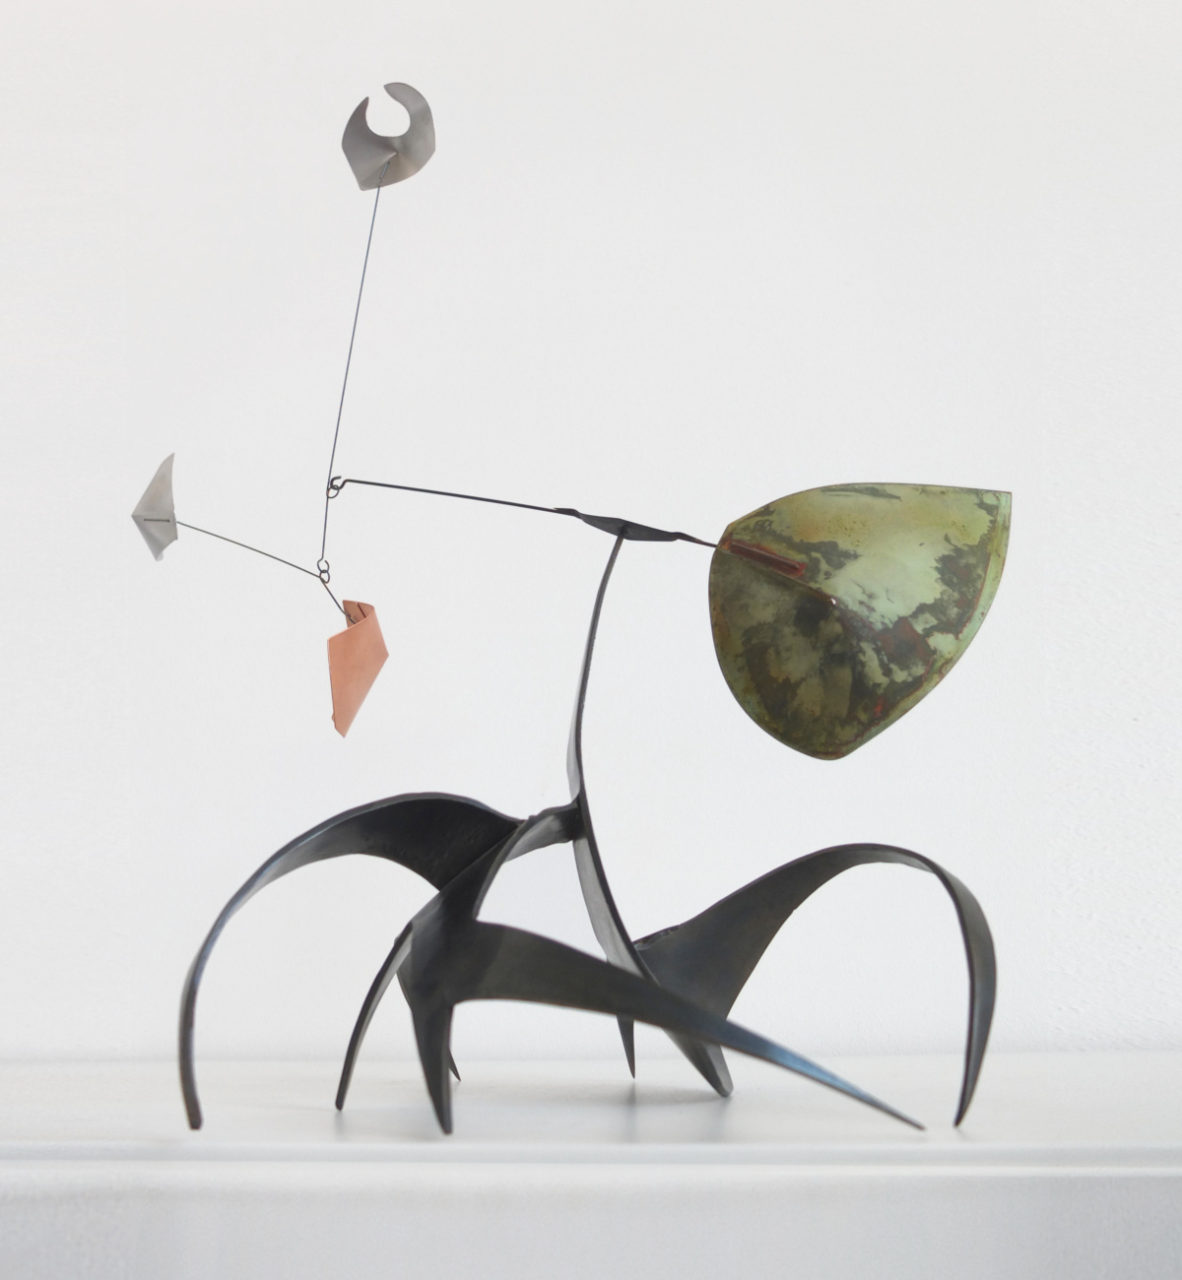 Alex Palenski Centipede stabile sculpture mobile